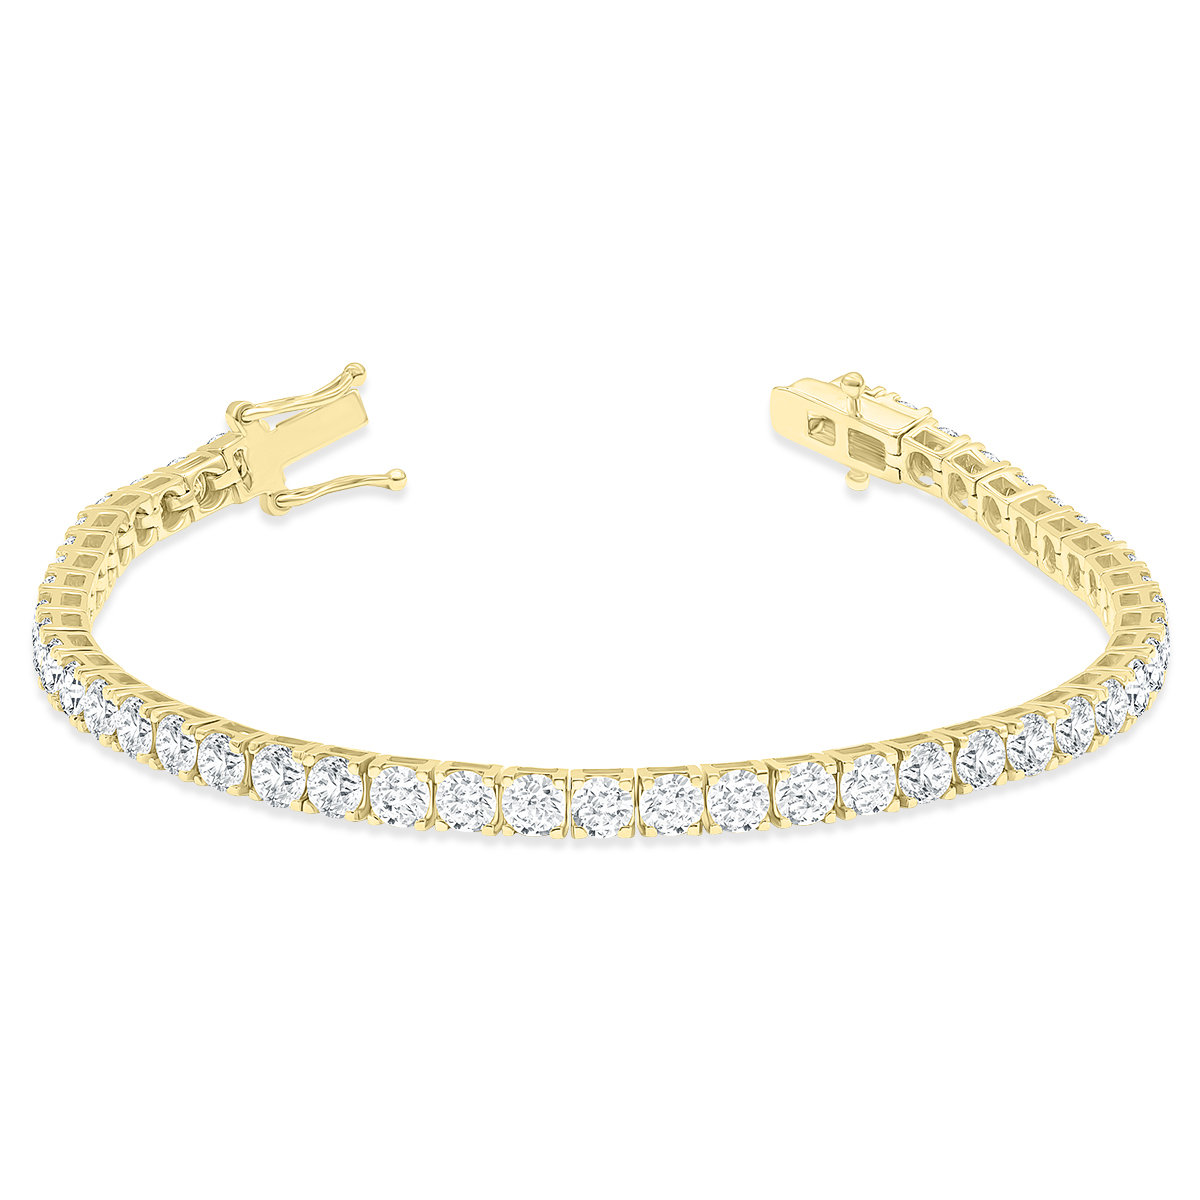 10 Carat TW Diamond Tennis Bracelet in 14K Yellow Gold